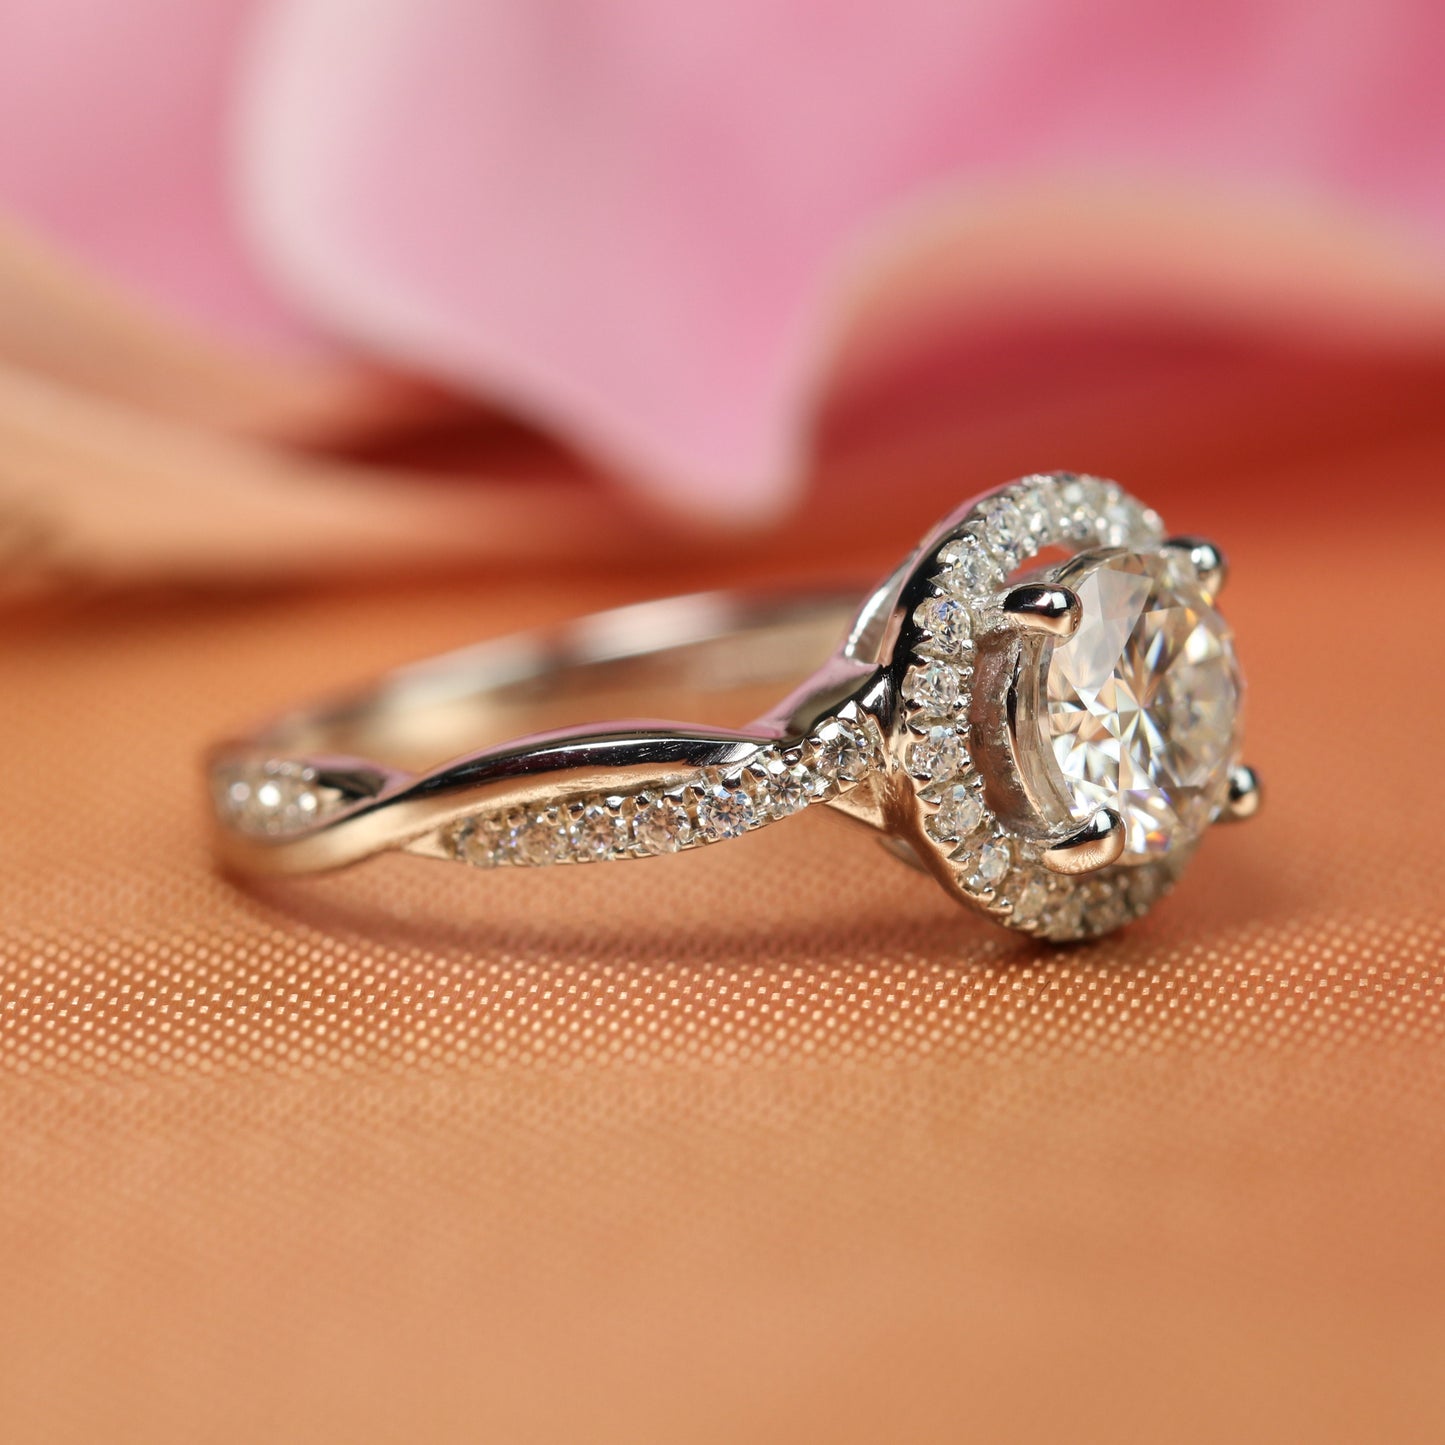 Unique 1.4 carat Round cut Moissanite Engagement Ring in Gold